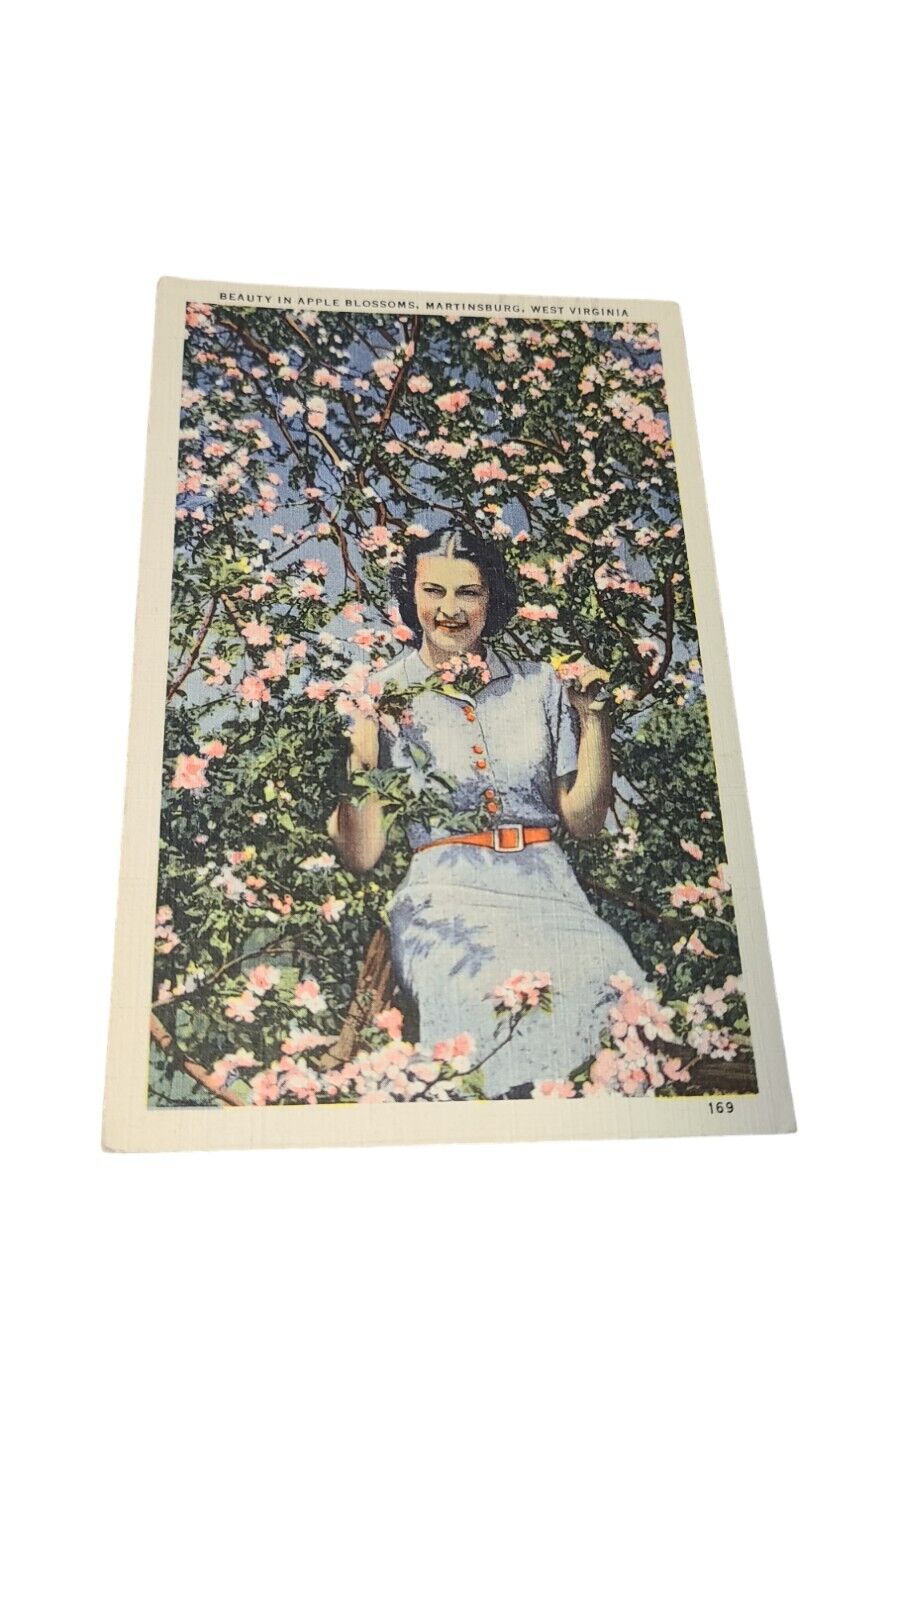 Beauty in Apple Blossoms Martinsburg, West Virginia WV Linen Postcard c1950s